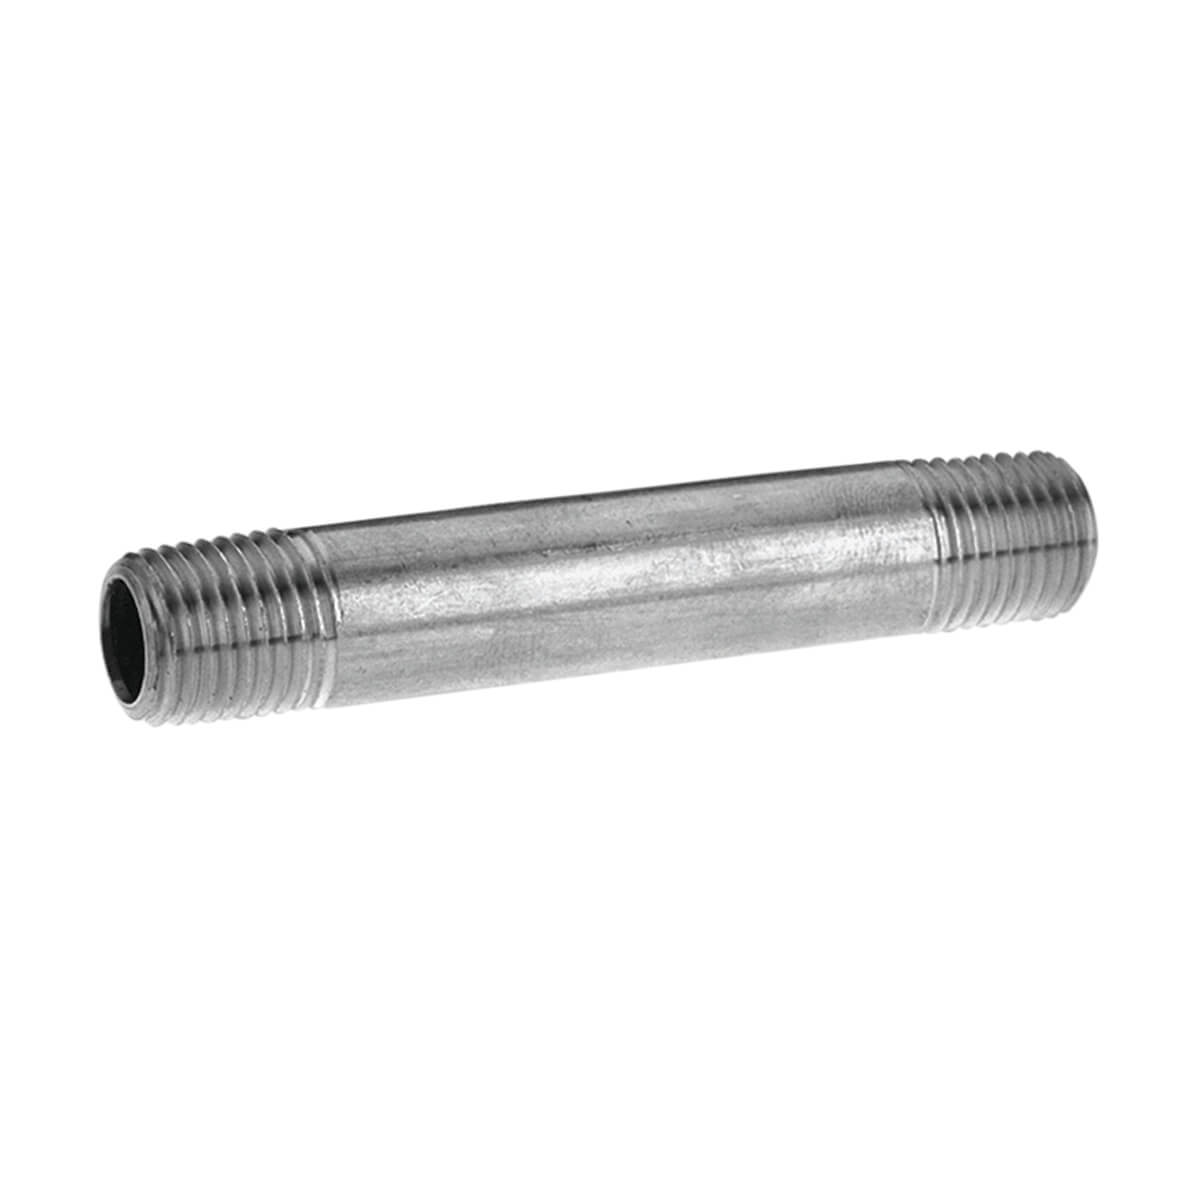 Pipe Nipple Galvanized Steel - 1-in x 60-in